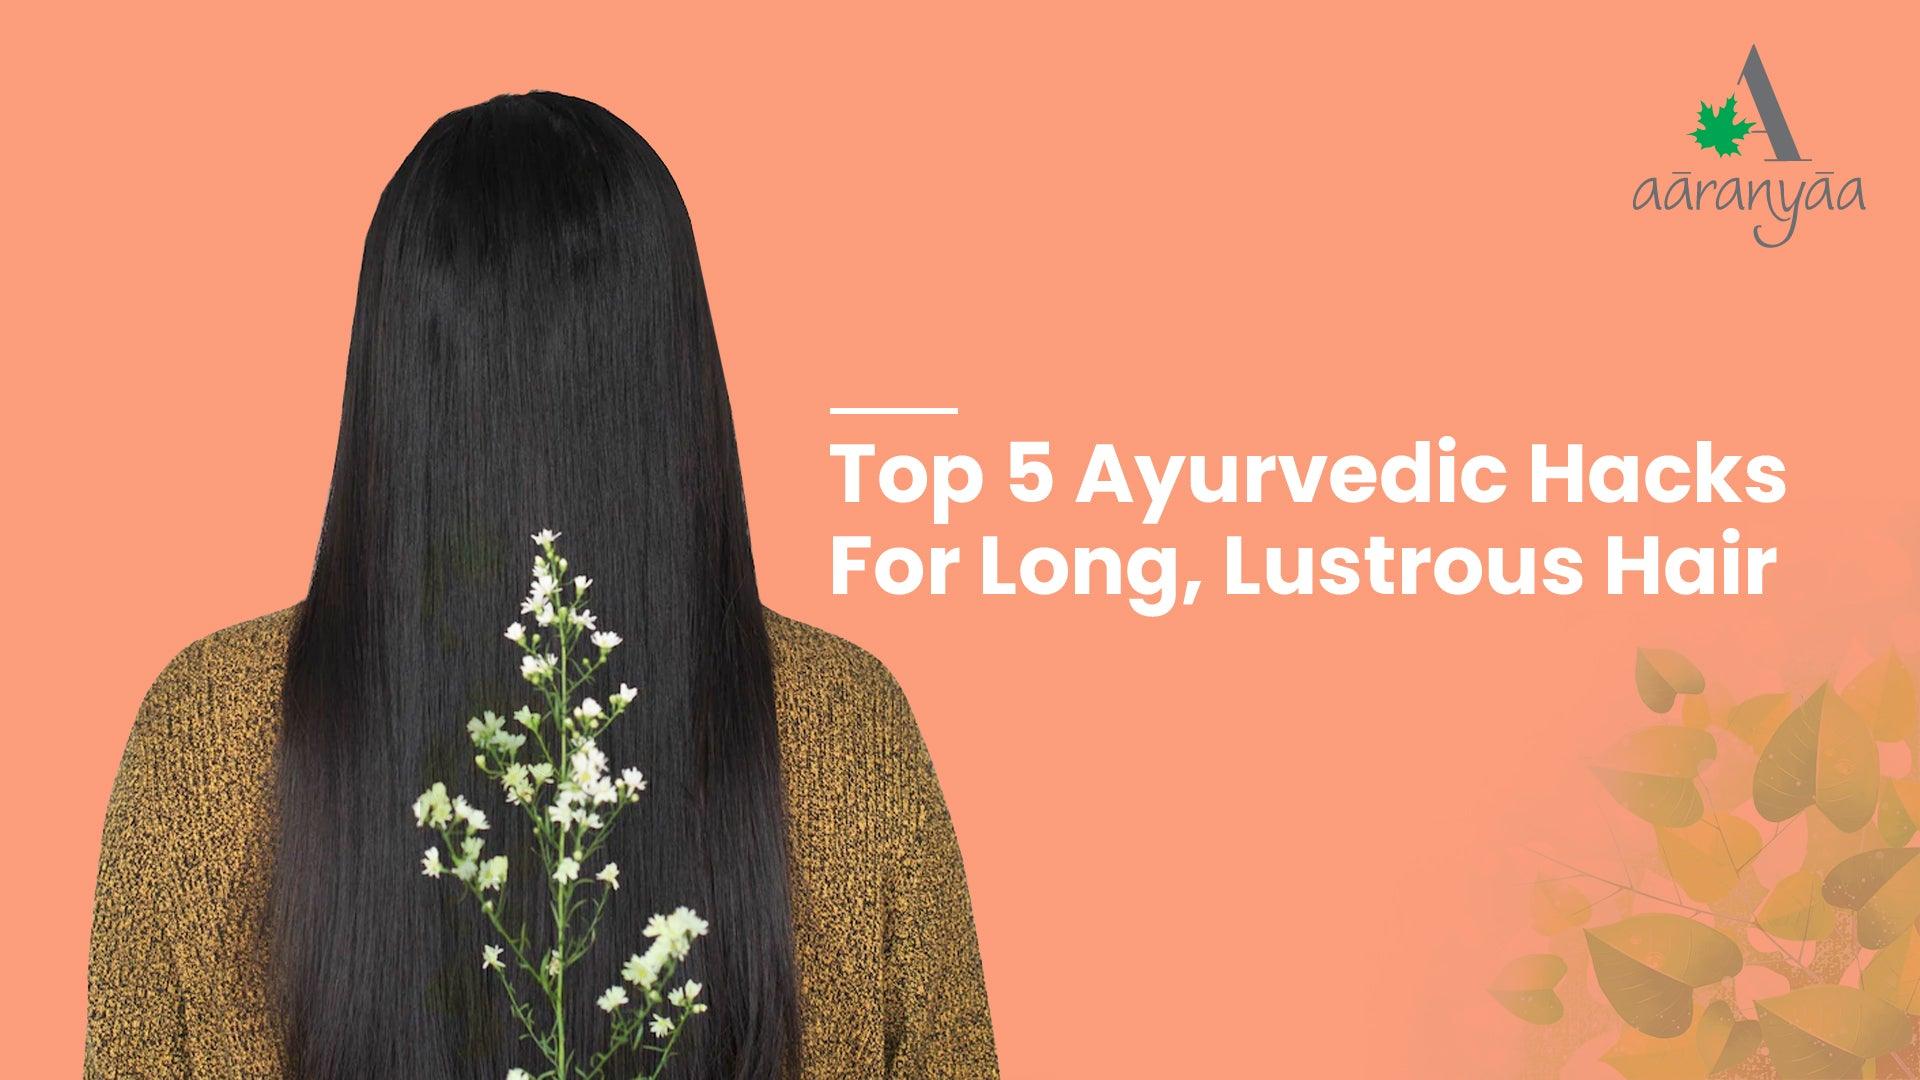 TOP 5 AYURVEDIC HACKS FOR LONG, LUSTROUS HAIR - aaranyaa skincare